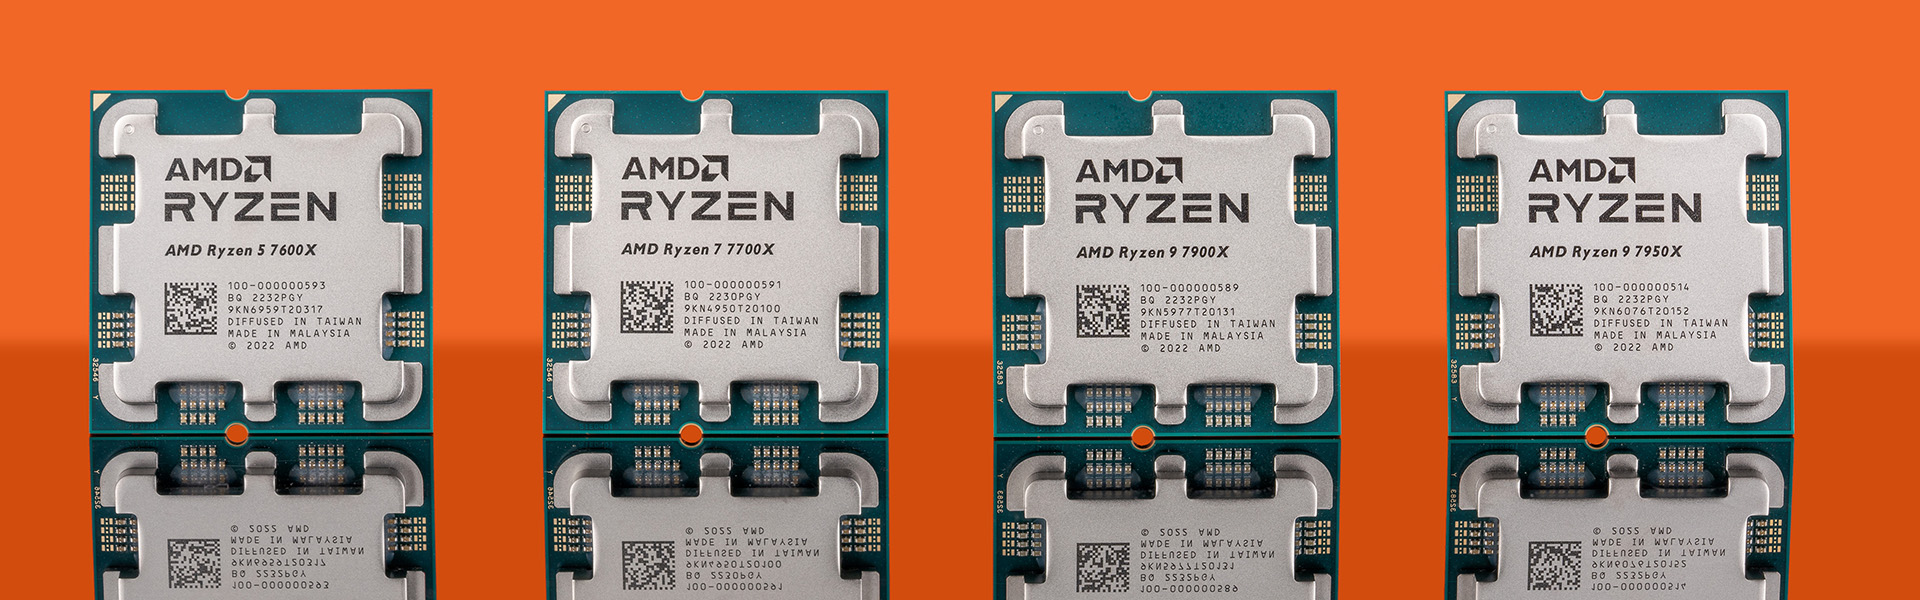 Newegg Announces Availability of AMD Ryzen 7000 Series Desktop Processors with “Zen 4” Architecture